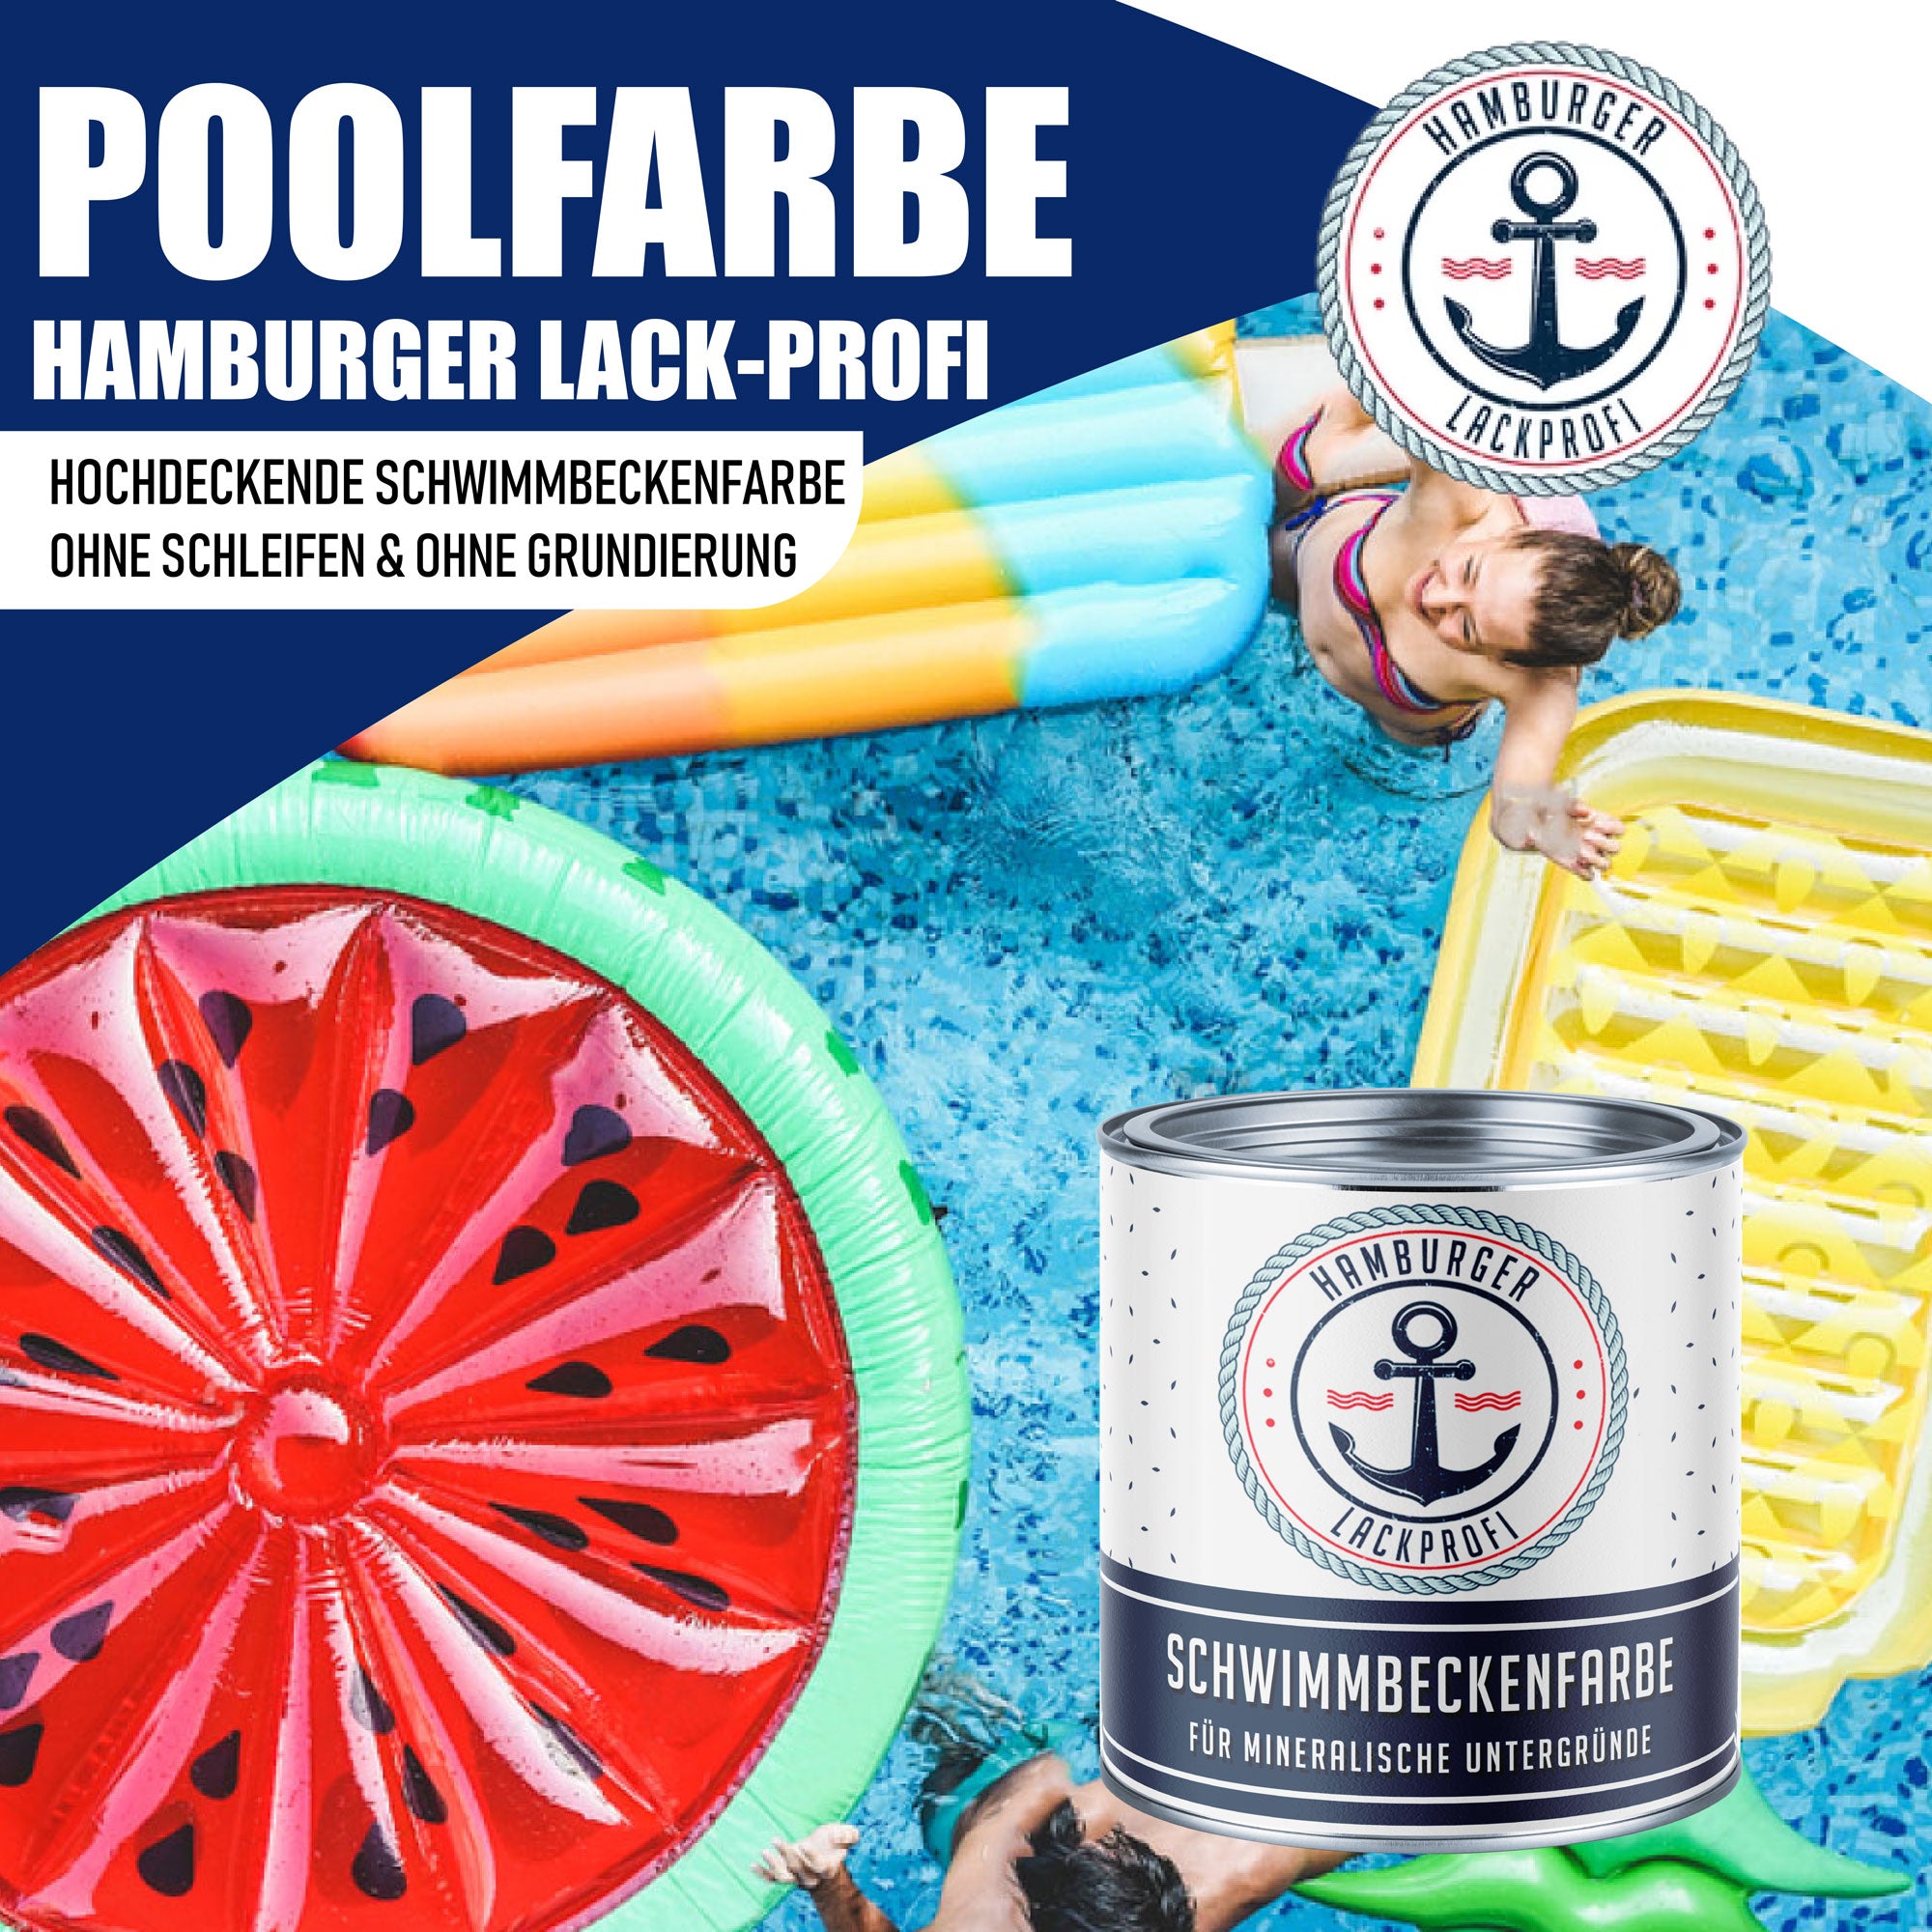 Hamburger Lack-Profi Schwimmbeckenfarbe Moosgrau RAL 7003 - hochdeckende Poolfarbe